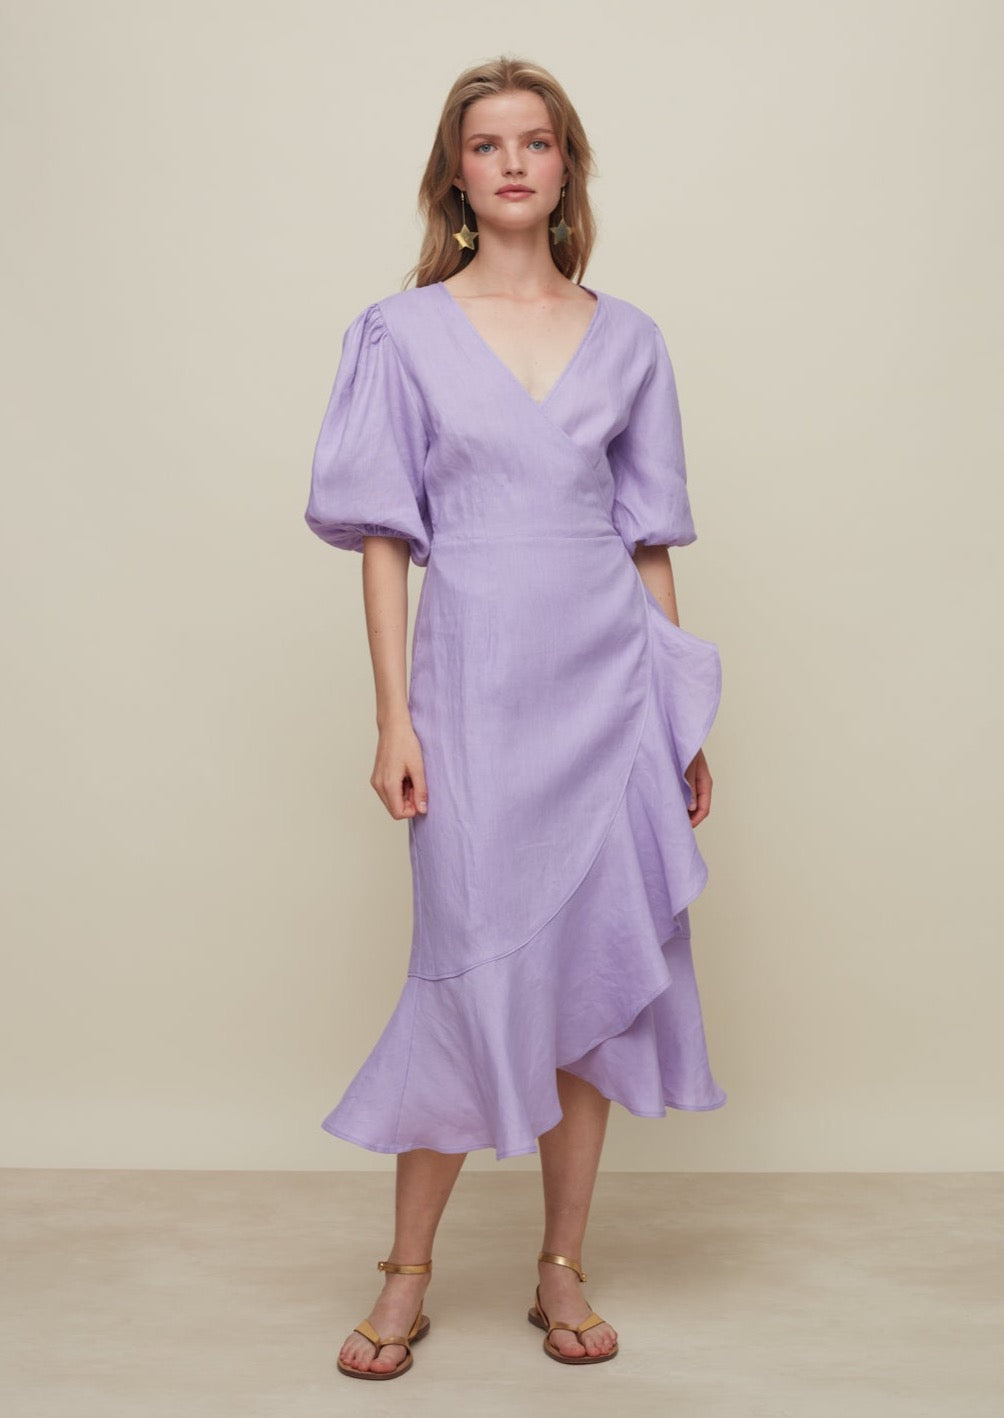 Galeria-Crossed Lilac Dress-Justbrazil